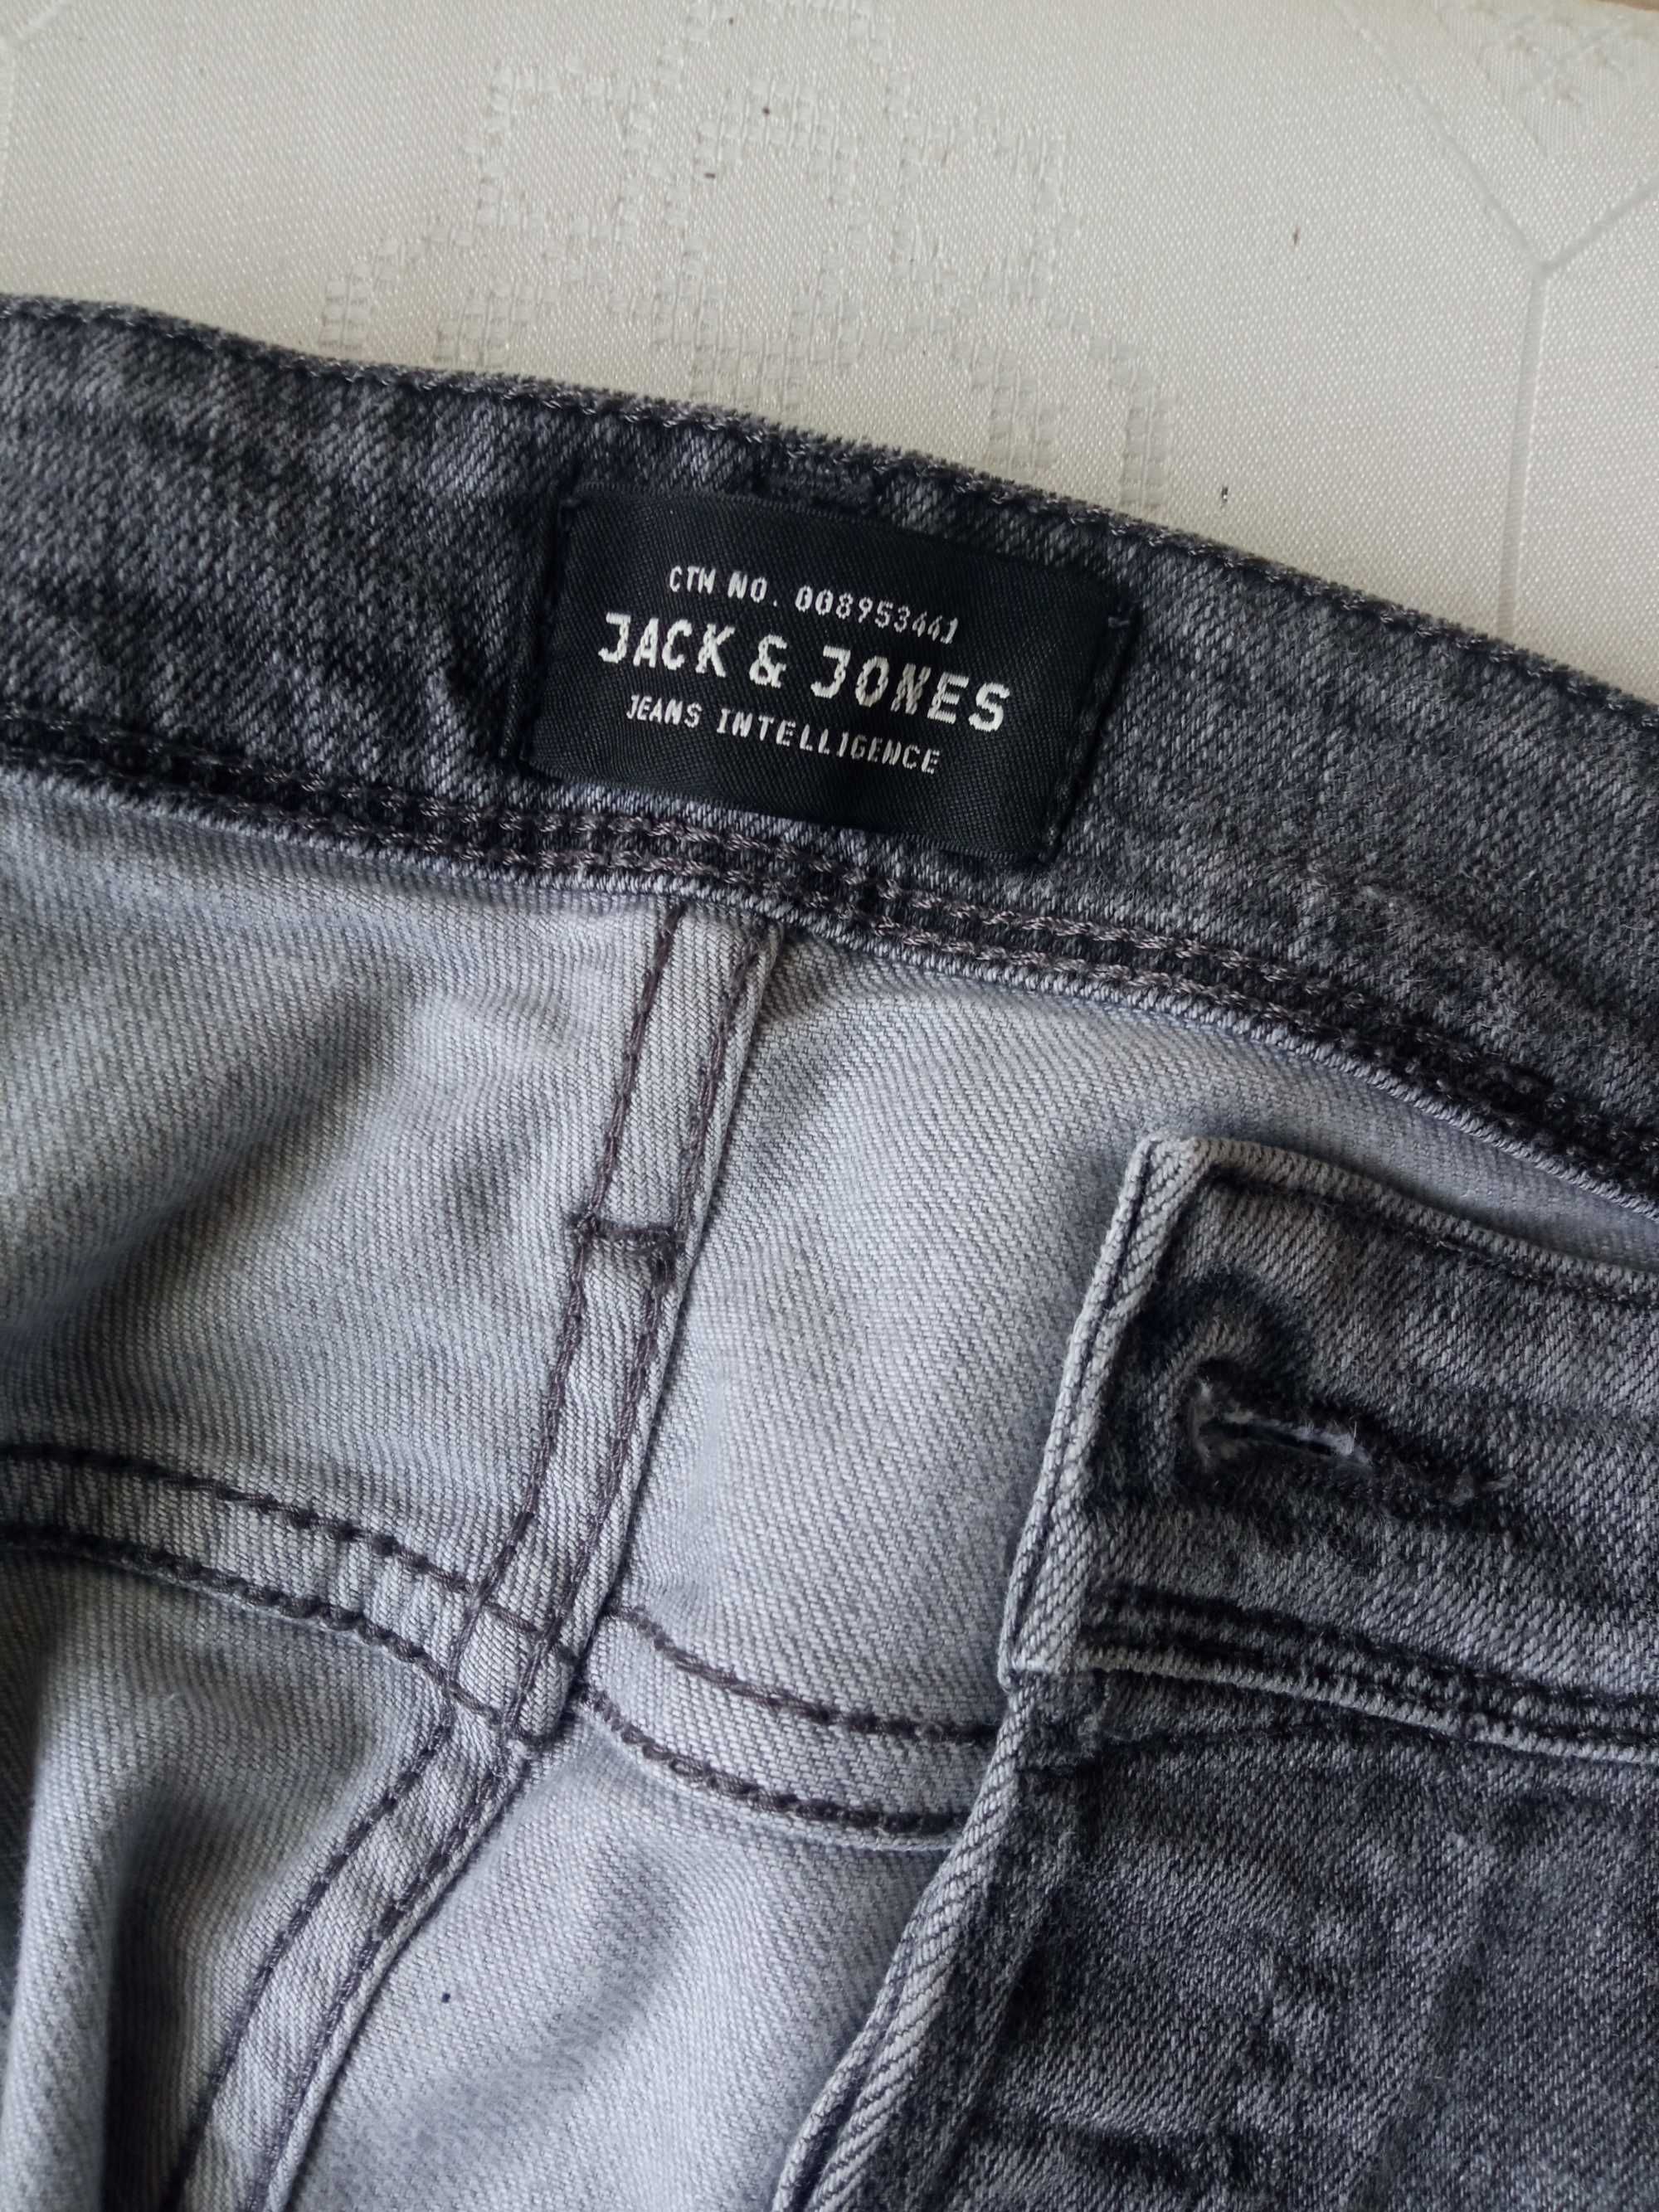 Jack & Jones męskie spodnie jeans r 34-32 pas 86-92cm